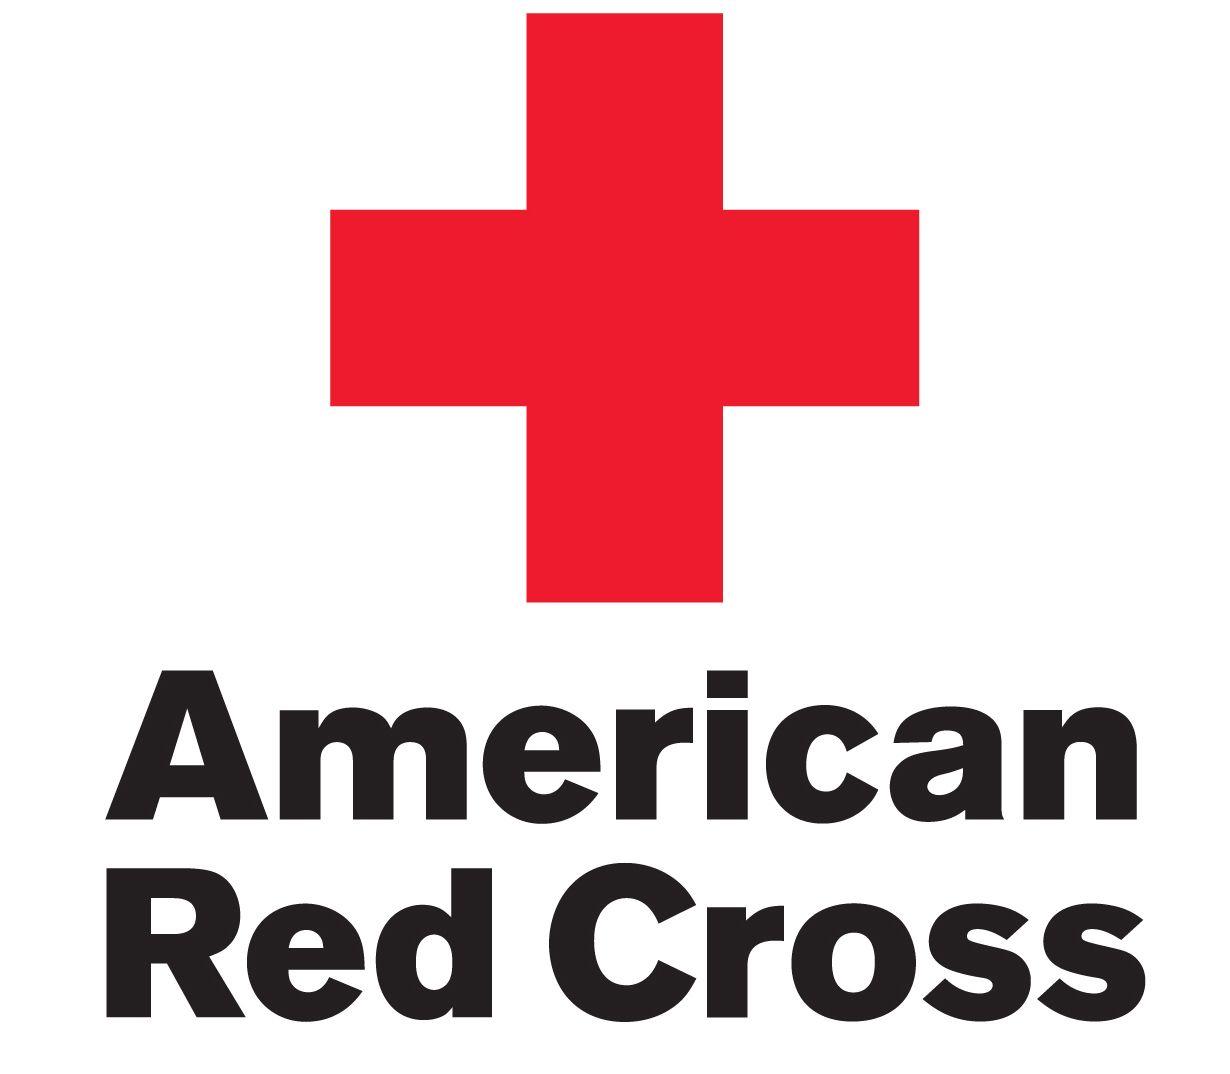 Red Cross in Shield Logo - American-Red-Cross-Logo - Bon Air